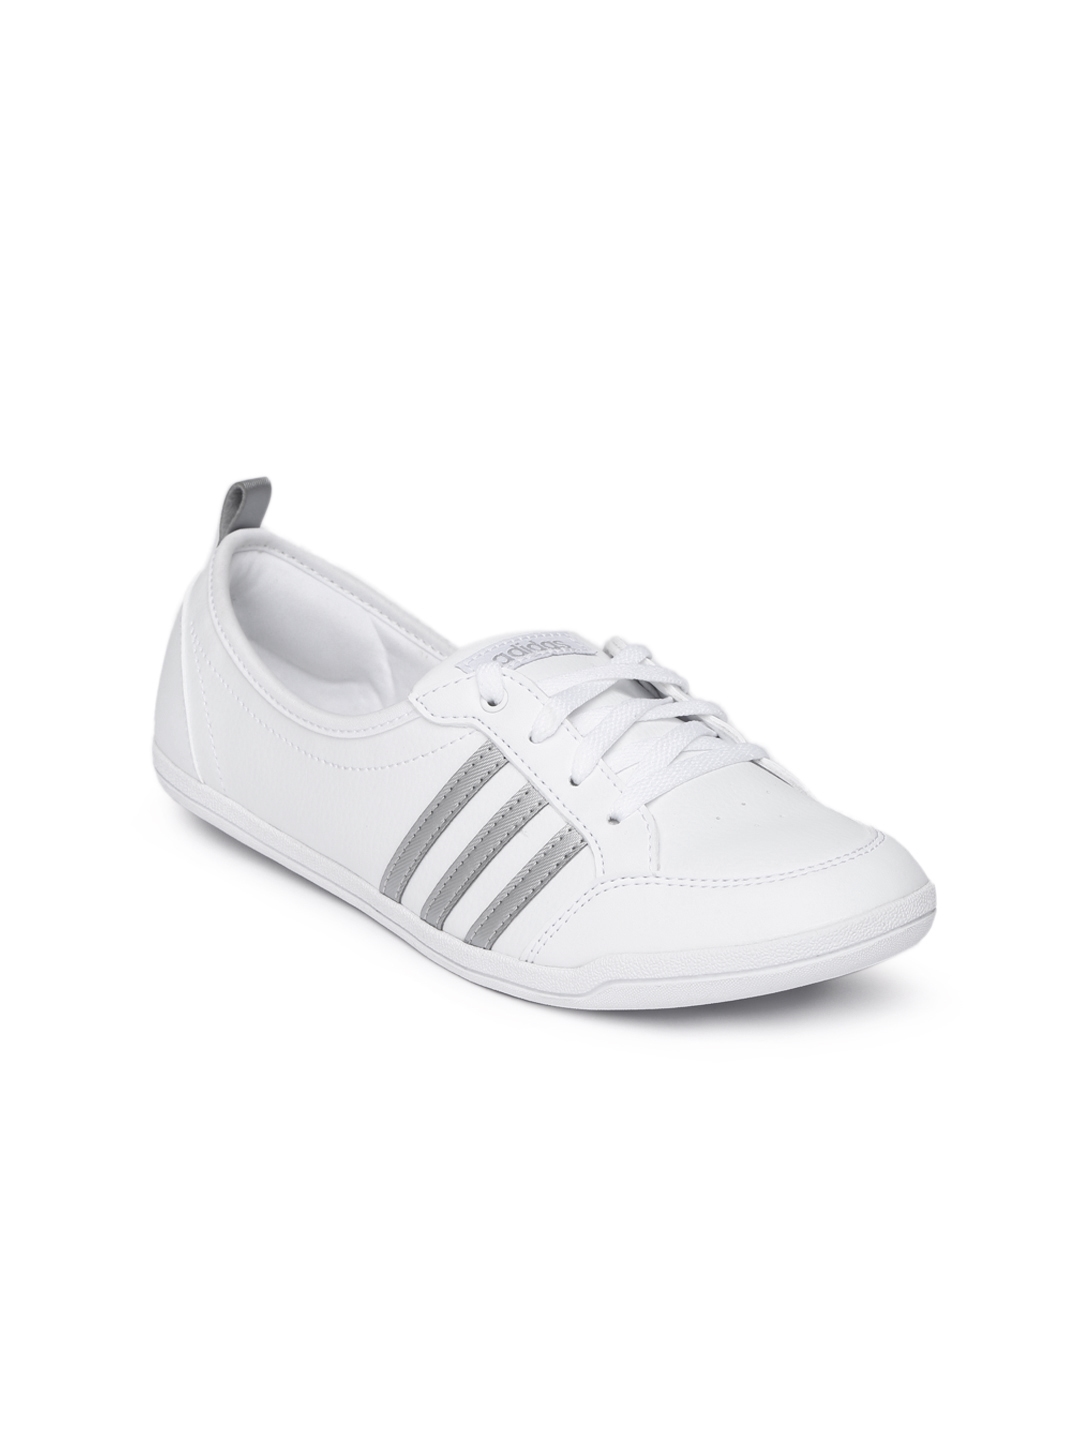 Buy ADIDAS NEO Women White Piona - Casual Shoes for Women 1416042 |